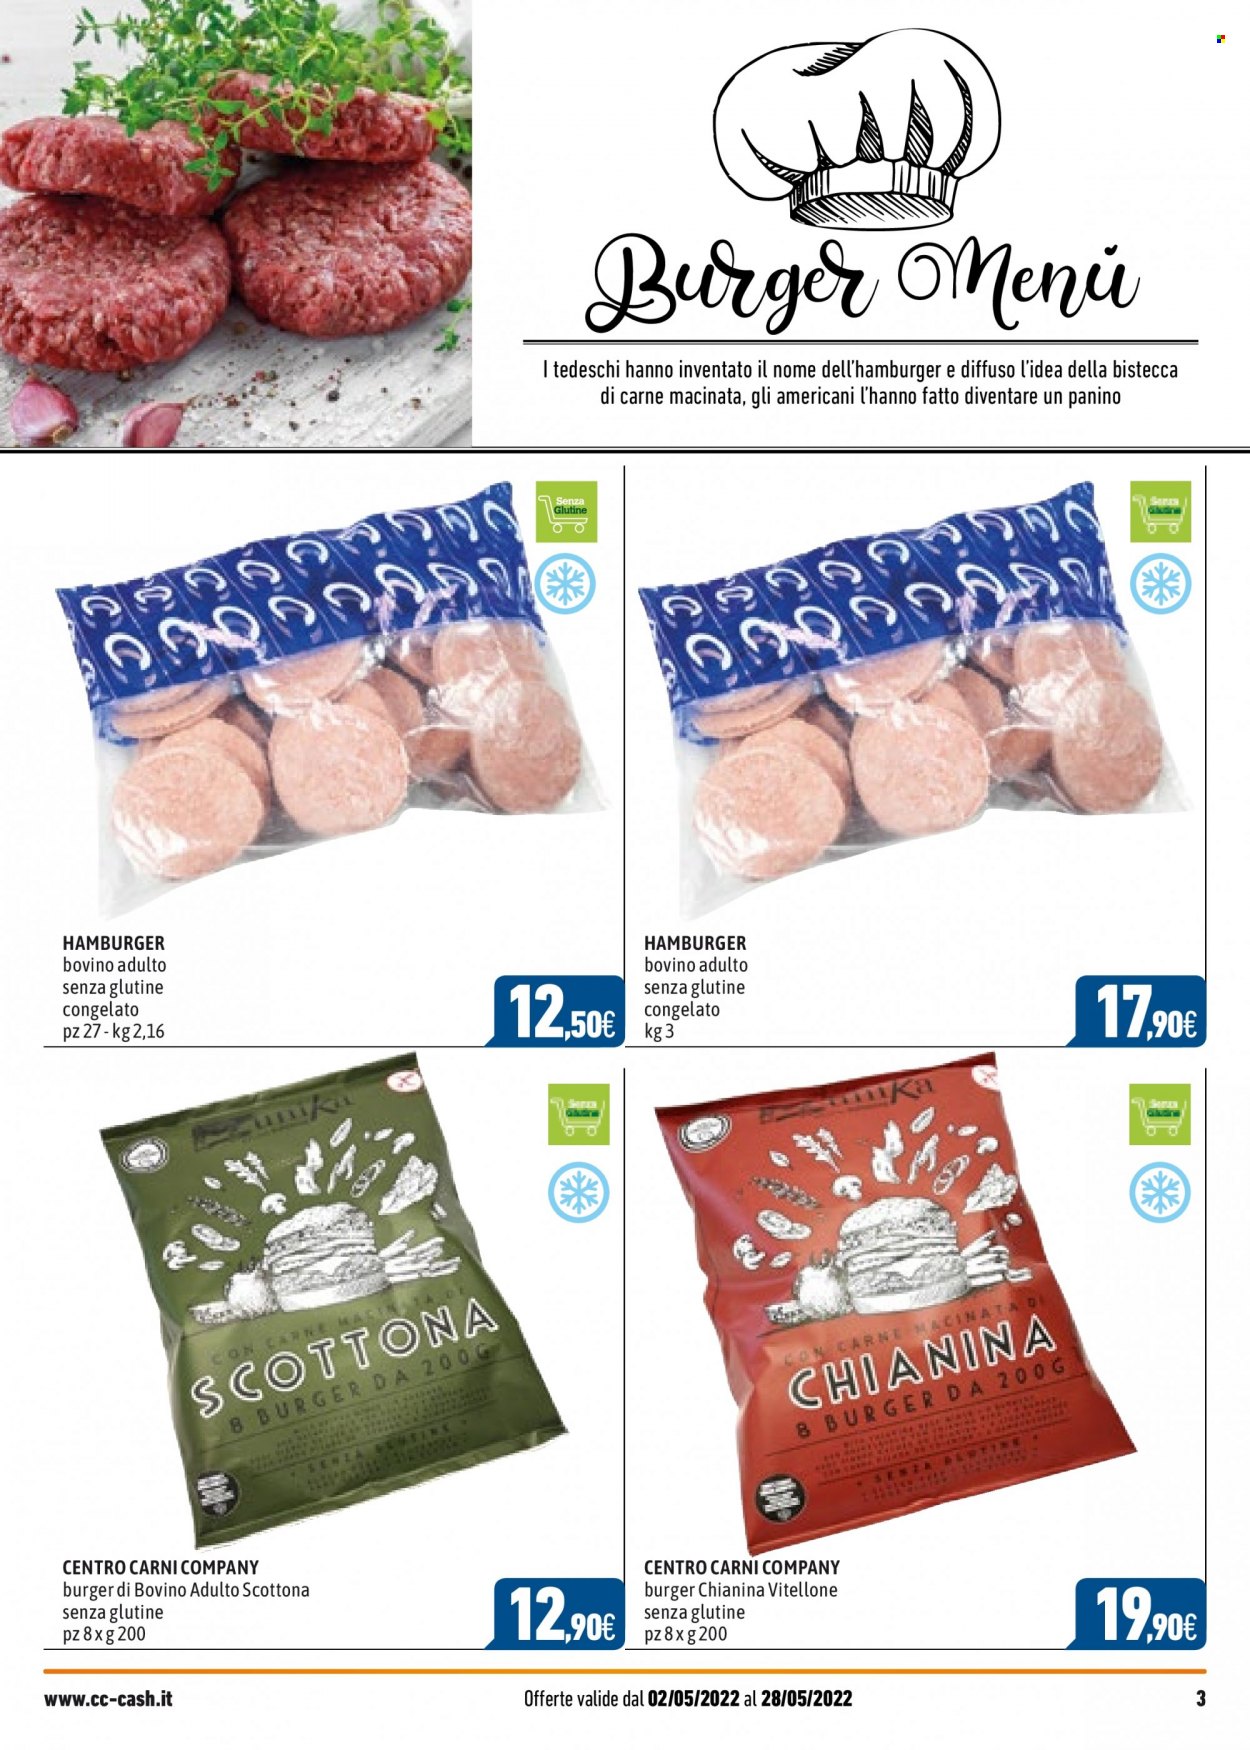 thumbnail - Volantino C+C Cash & Carry - 2/5/2022 - 28/5/2022 - Prodotti in offerta - bistecca, manzo, vitellone, scottona, carne macinata, hamburger. Pagina 3.